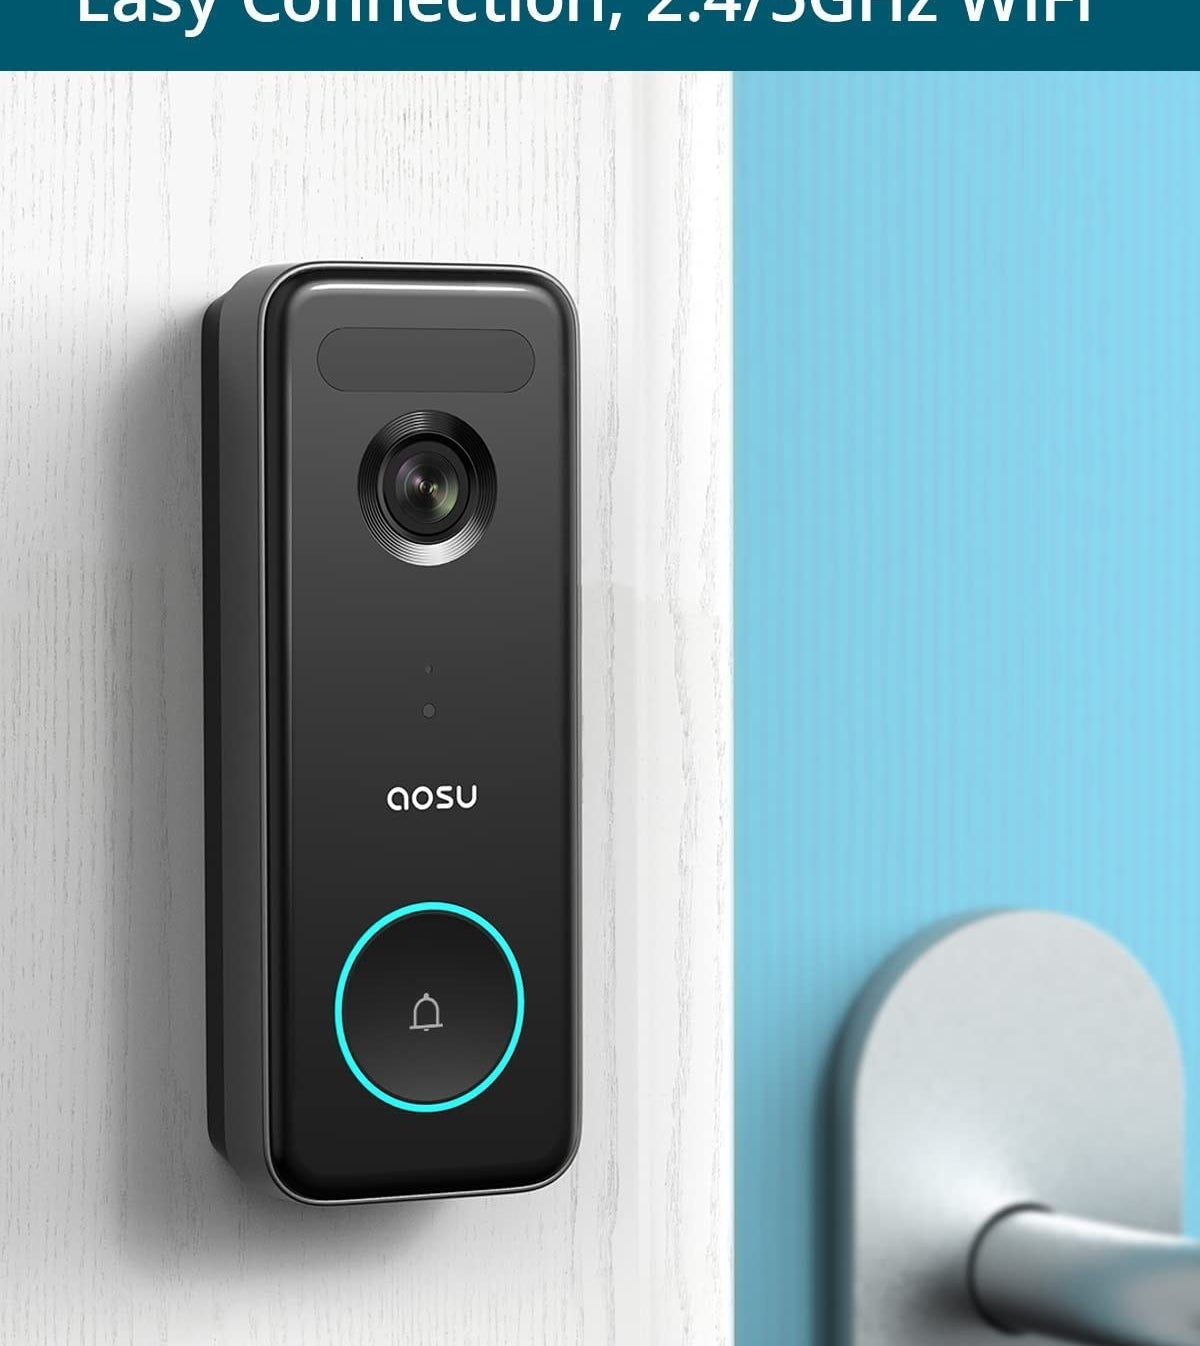 the doorbell camera mounted on a door frame